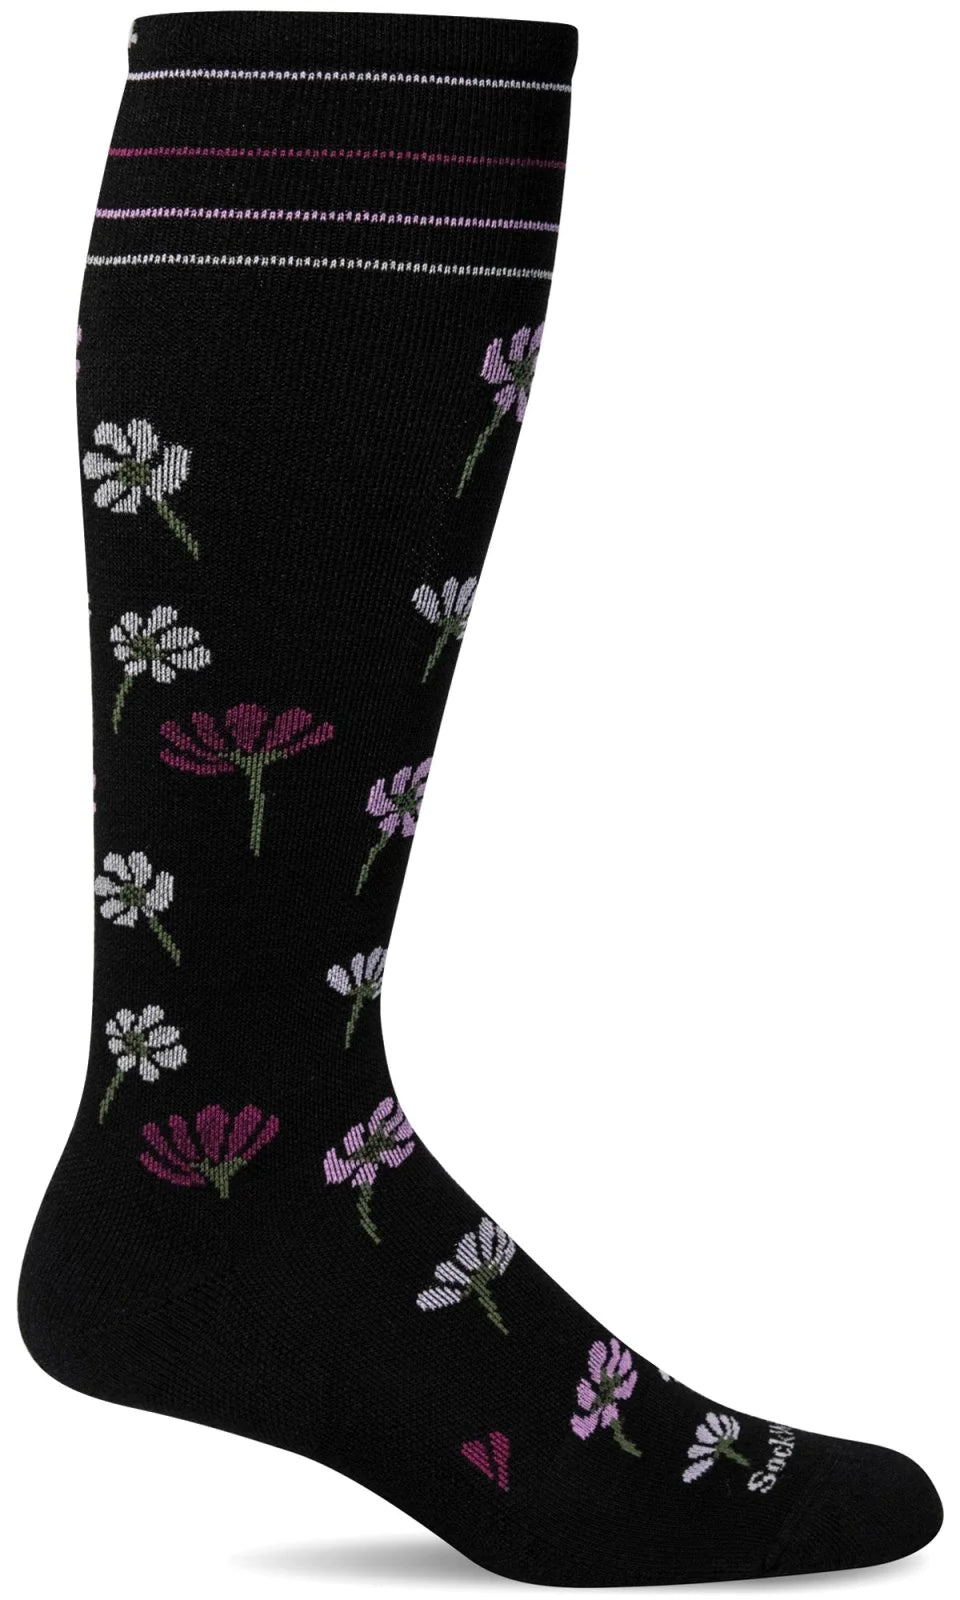 Sockwell Field Flower Moderate Graduated Compression Socks (Women's)